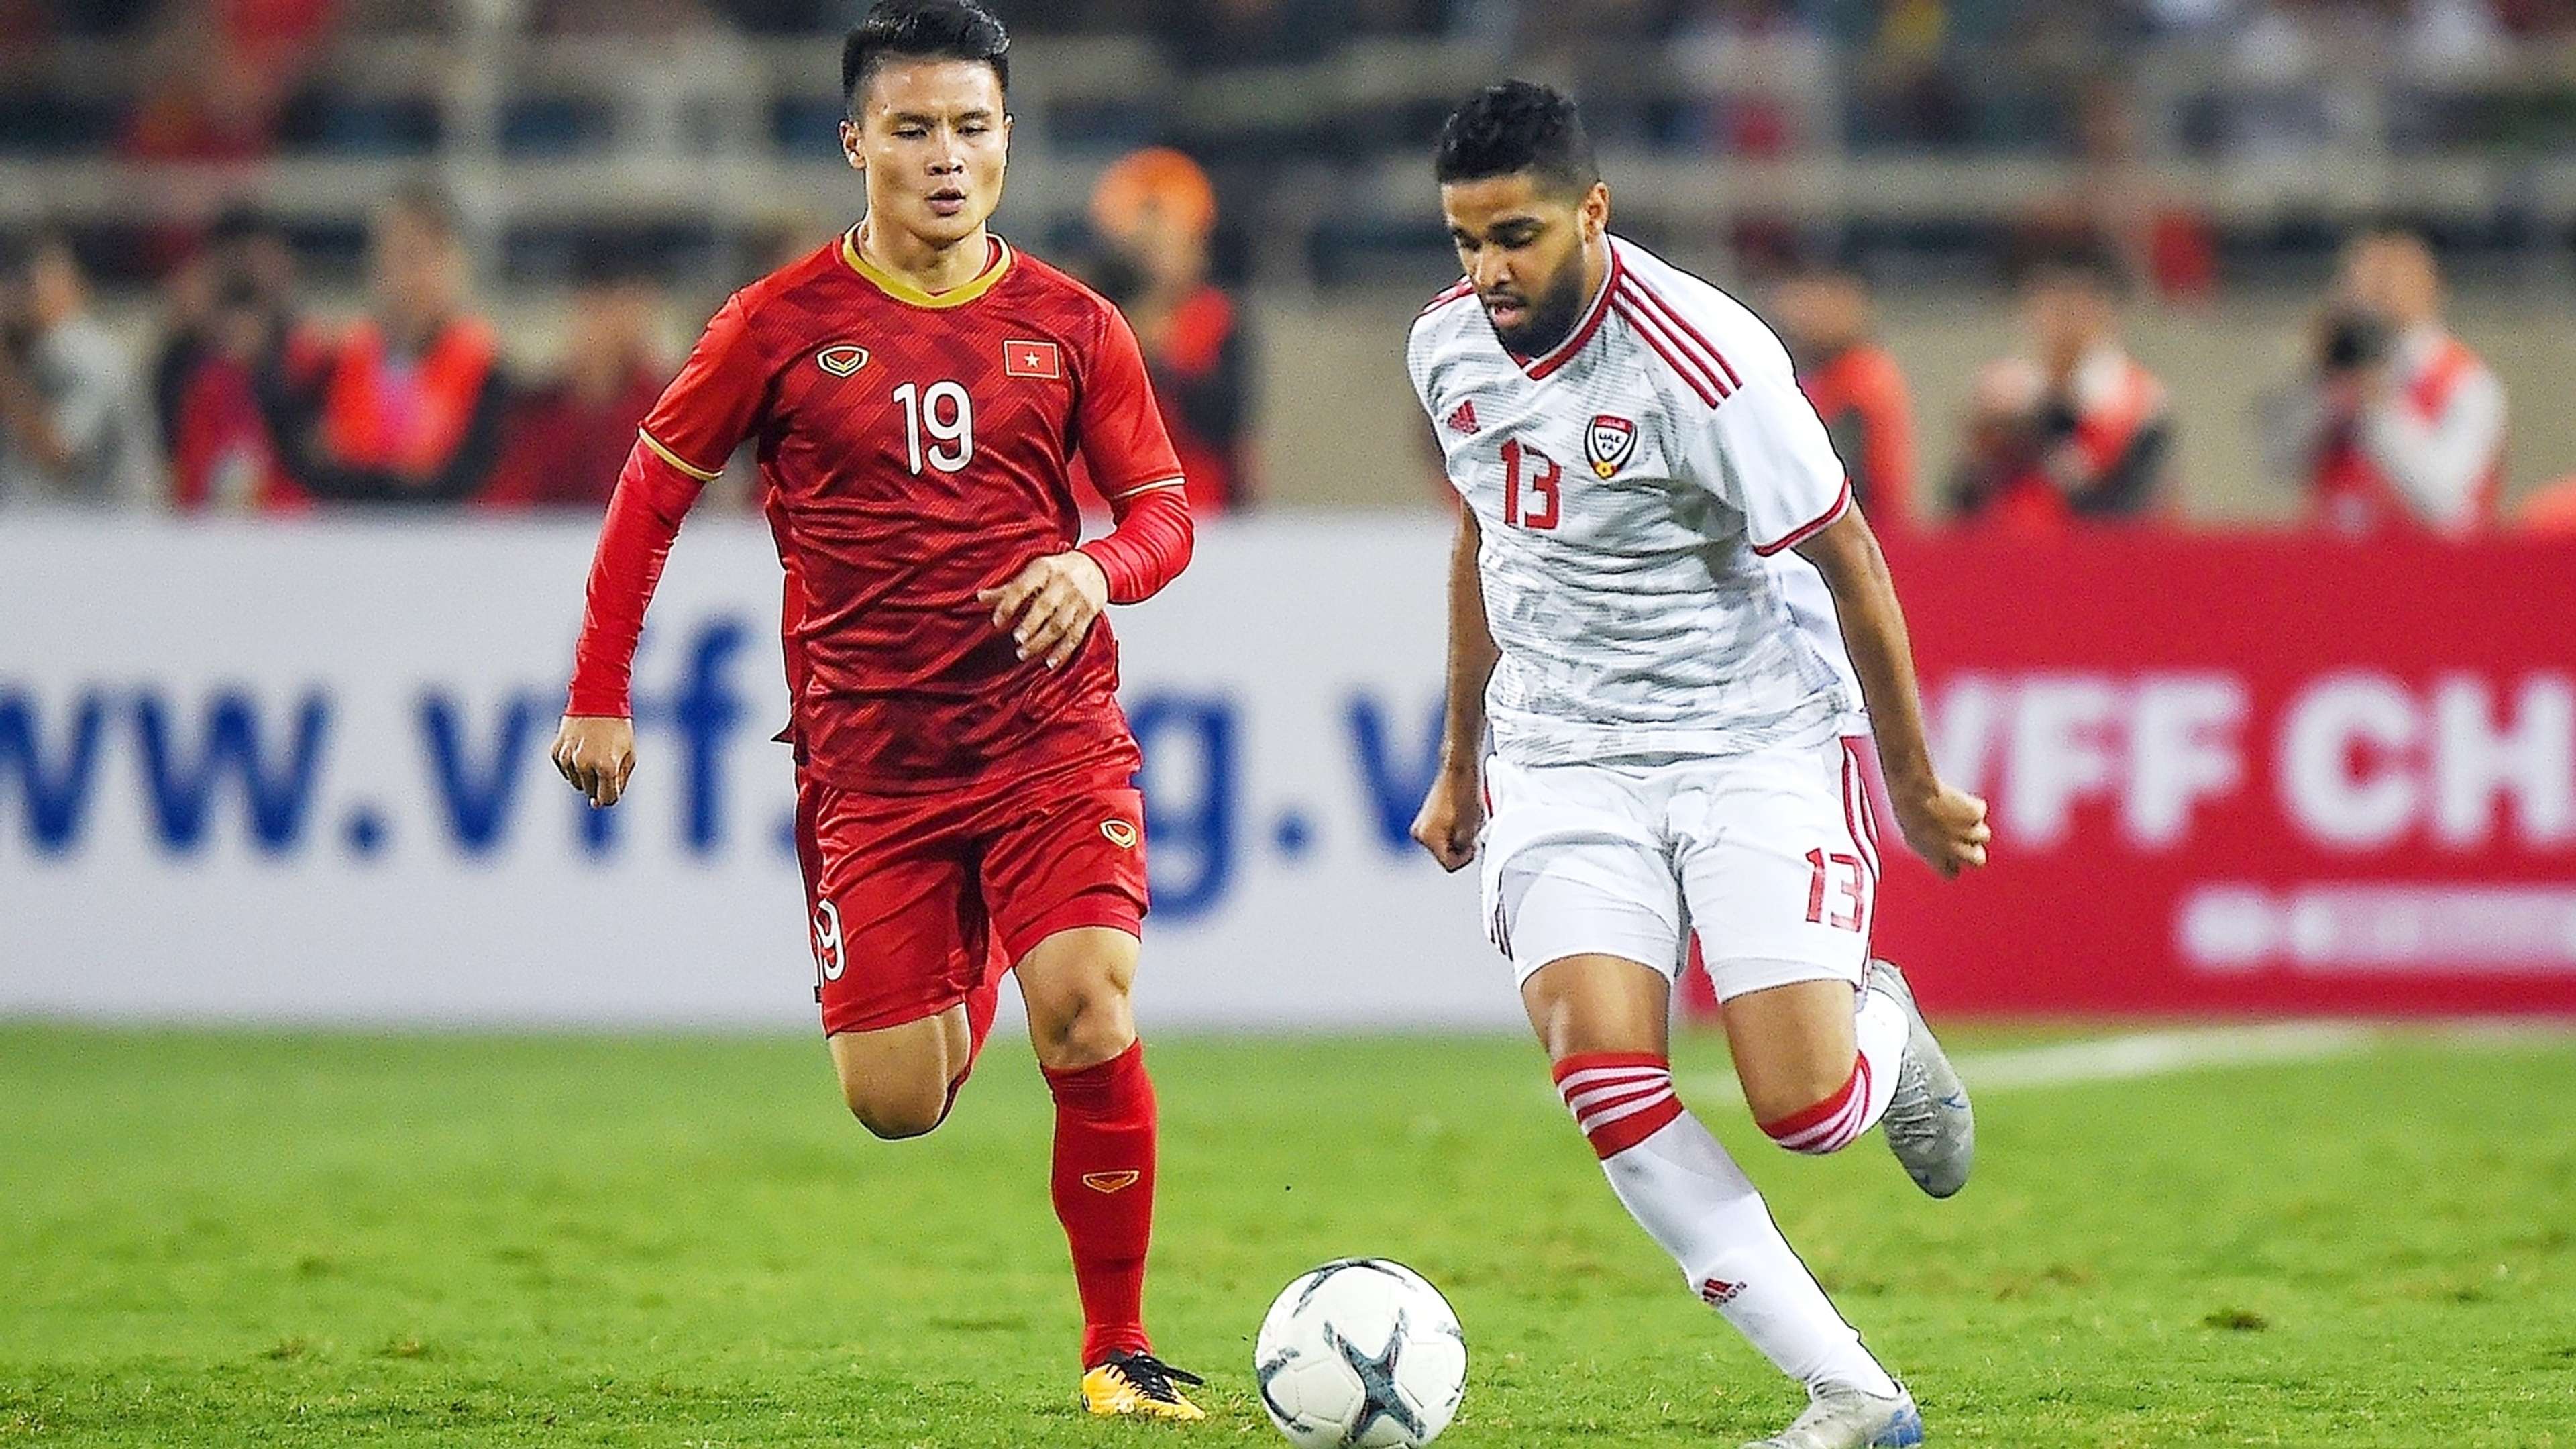 Nguyen Quang Hai vs Jassem Yaqoub | Vietnam vs UAE | World Cup 2022 qualification (AFC)